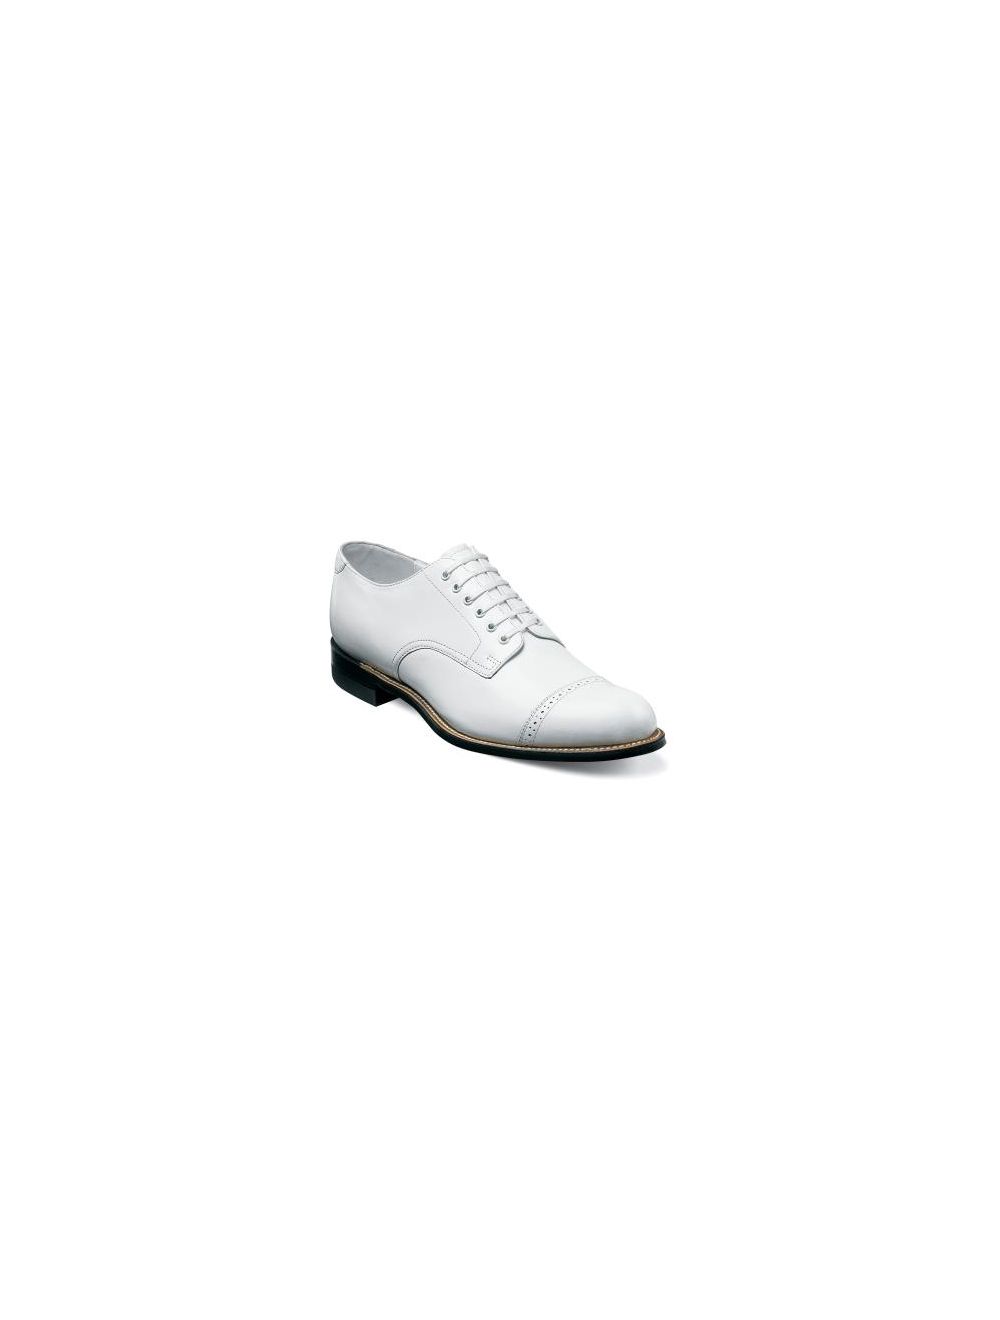 mens white oxford dress shoes